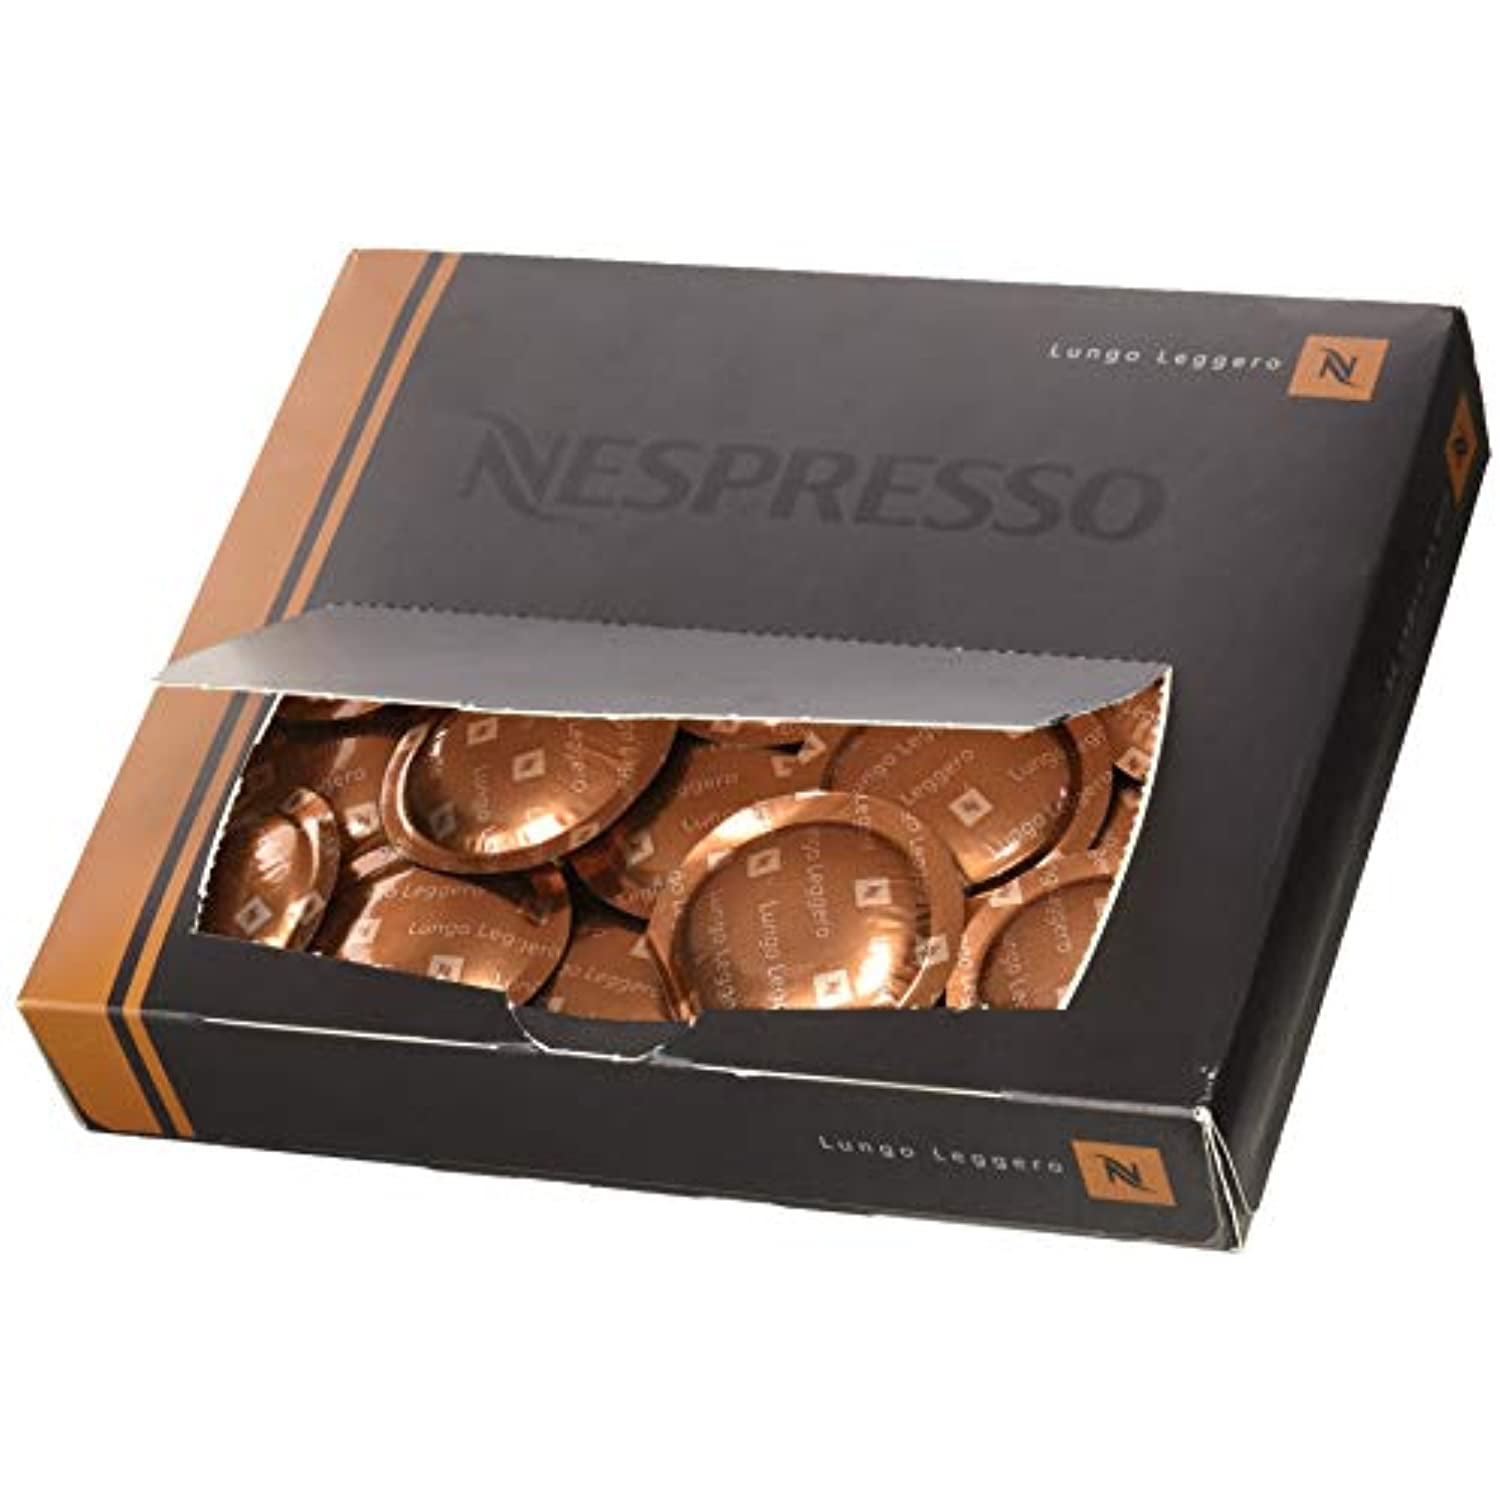 Nespresso Professional Lungo Leggero - 50 Pods 